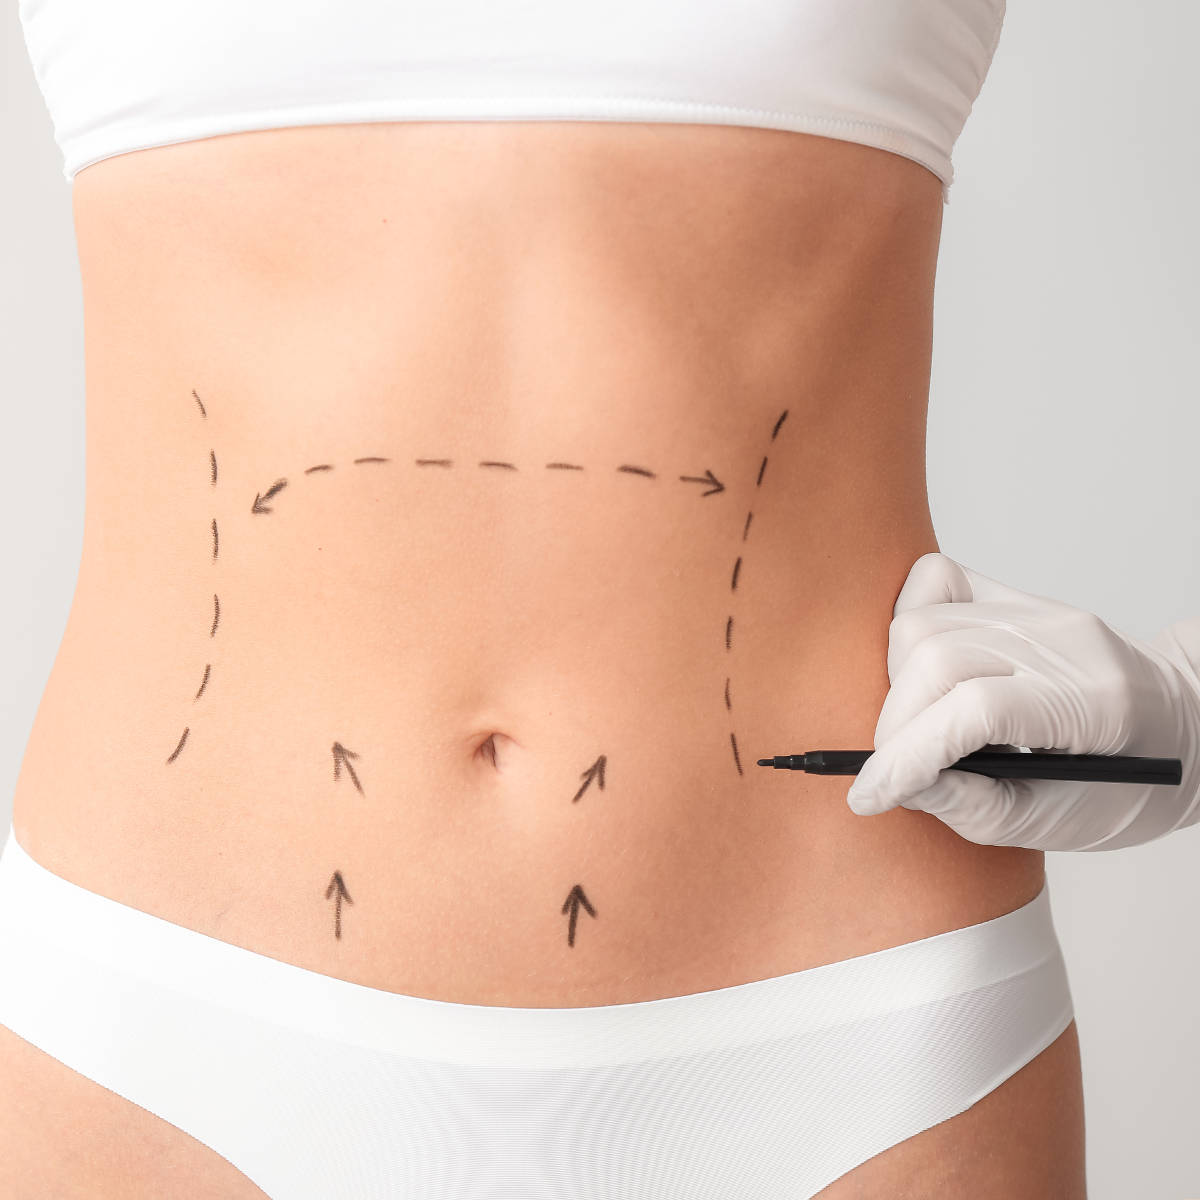 Plastic surgeon applying marks on female body